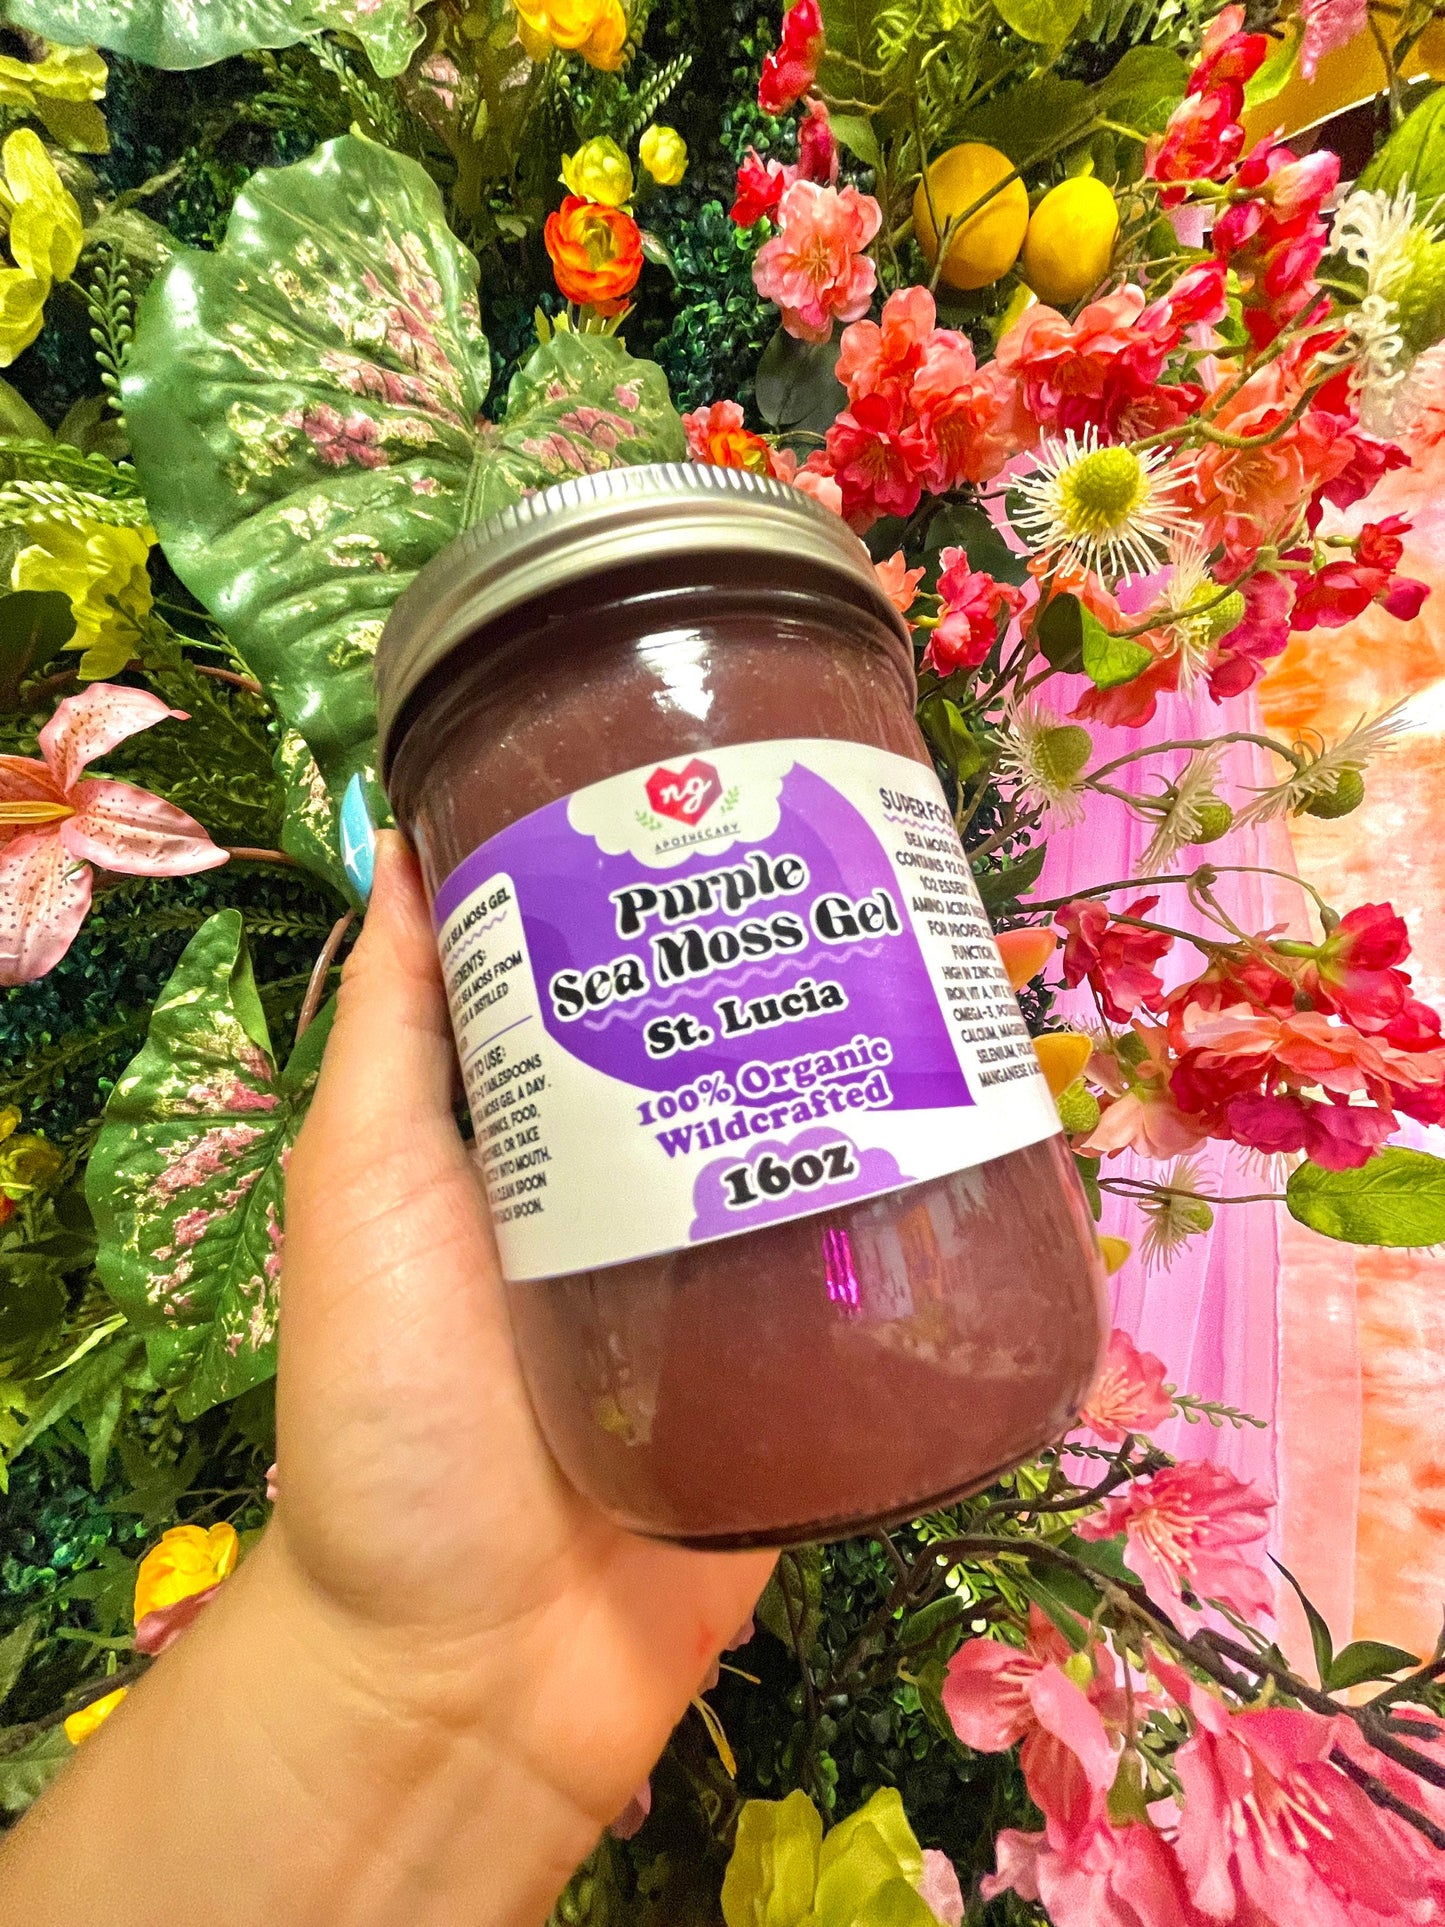 Wildcrafted St. Lucian Purple Sea Moss Gel 16oz - 100% Organic